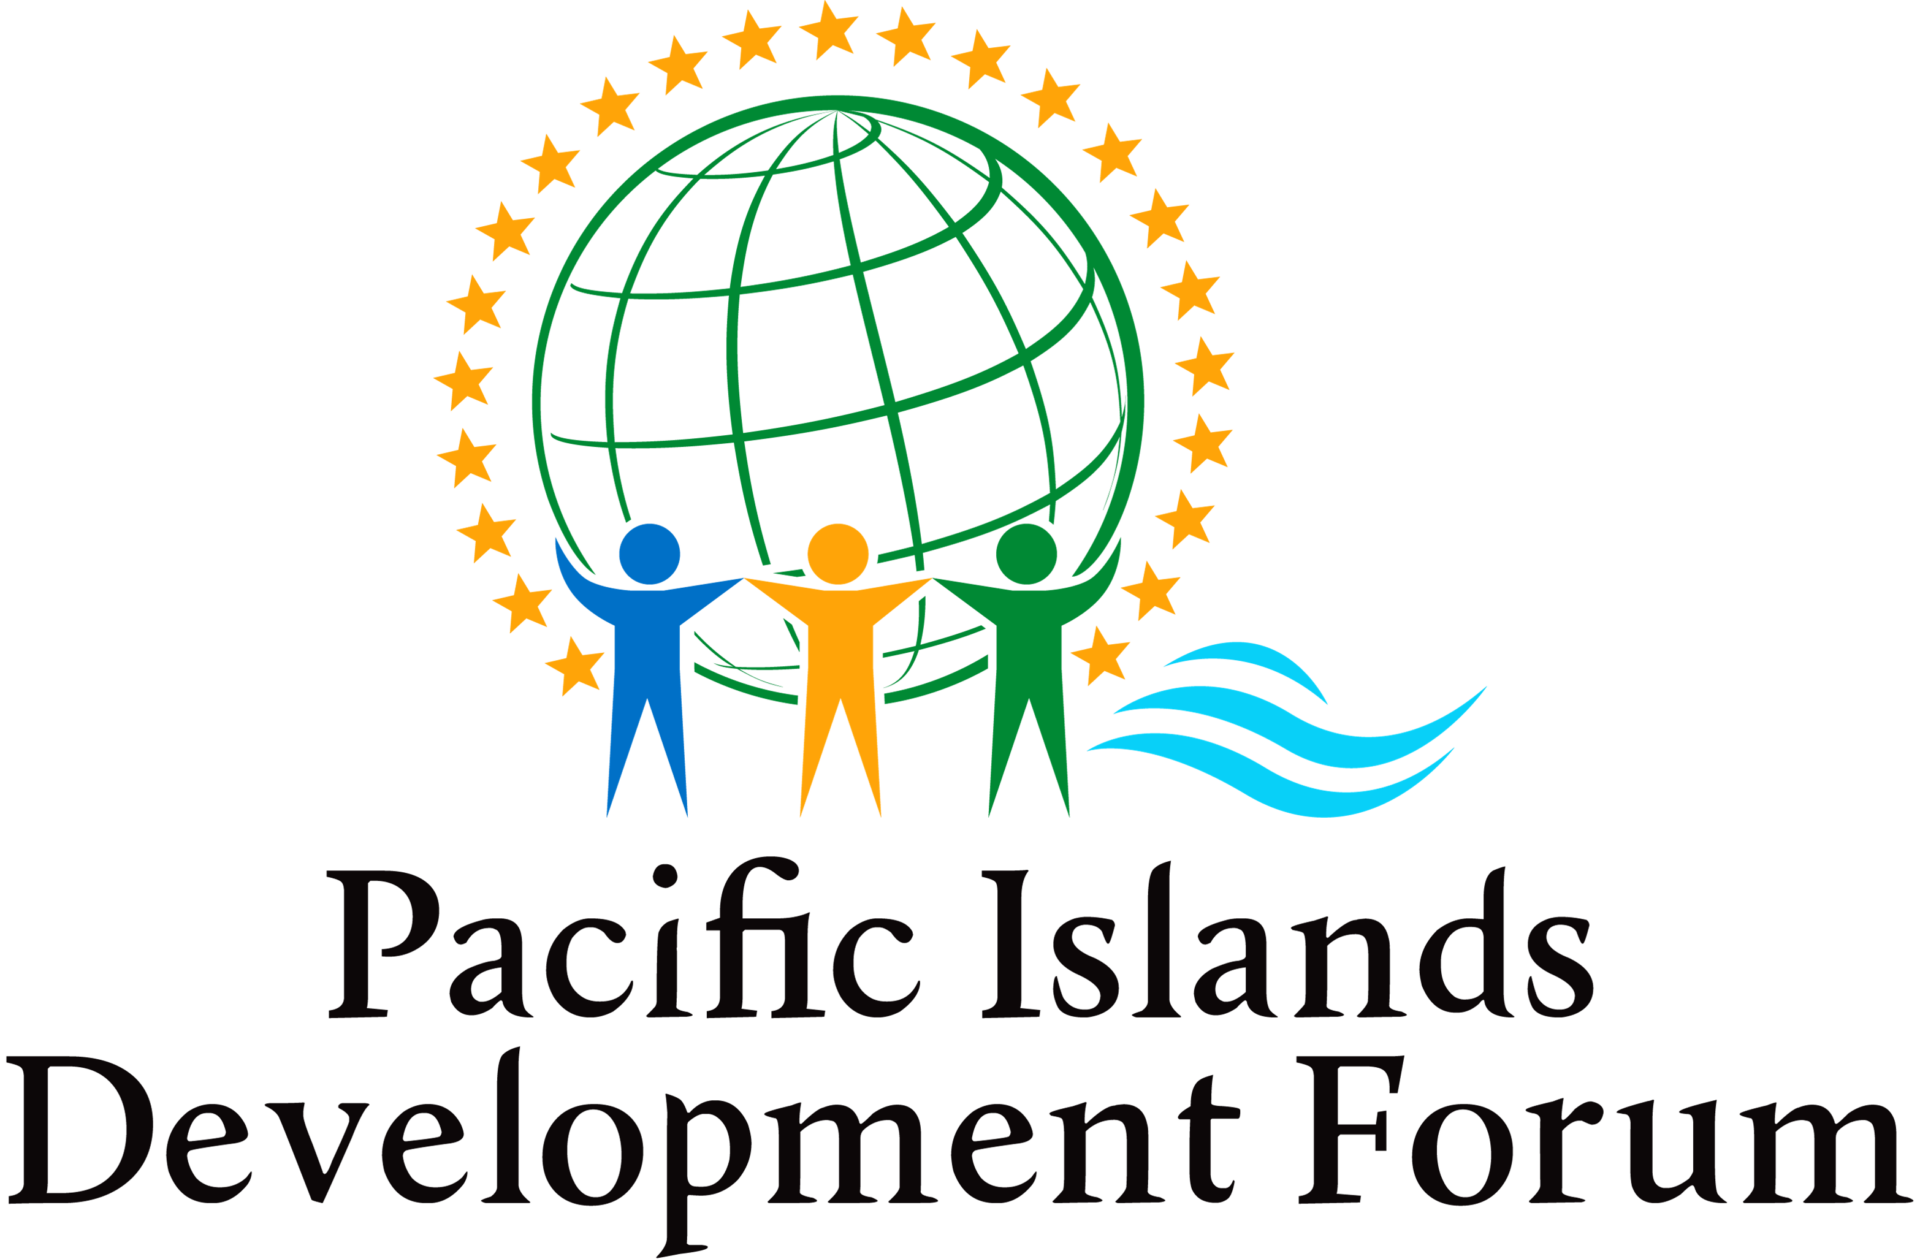 Pacific Islands Development Forum